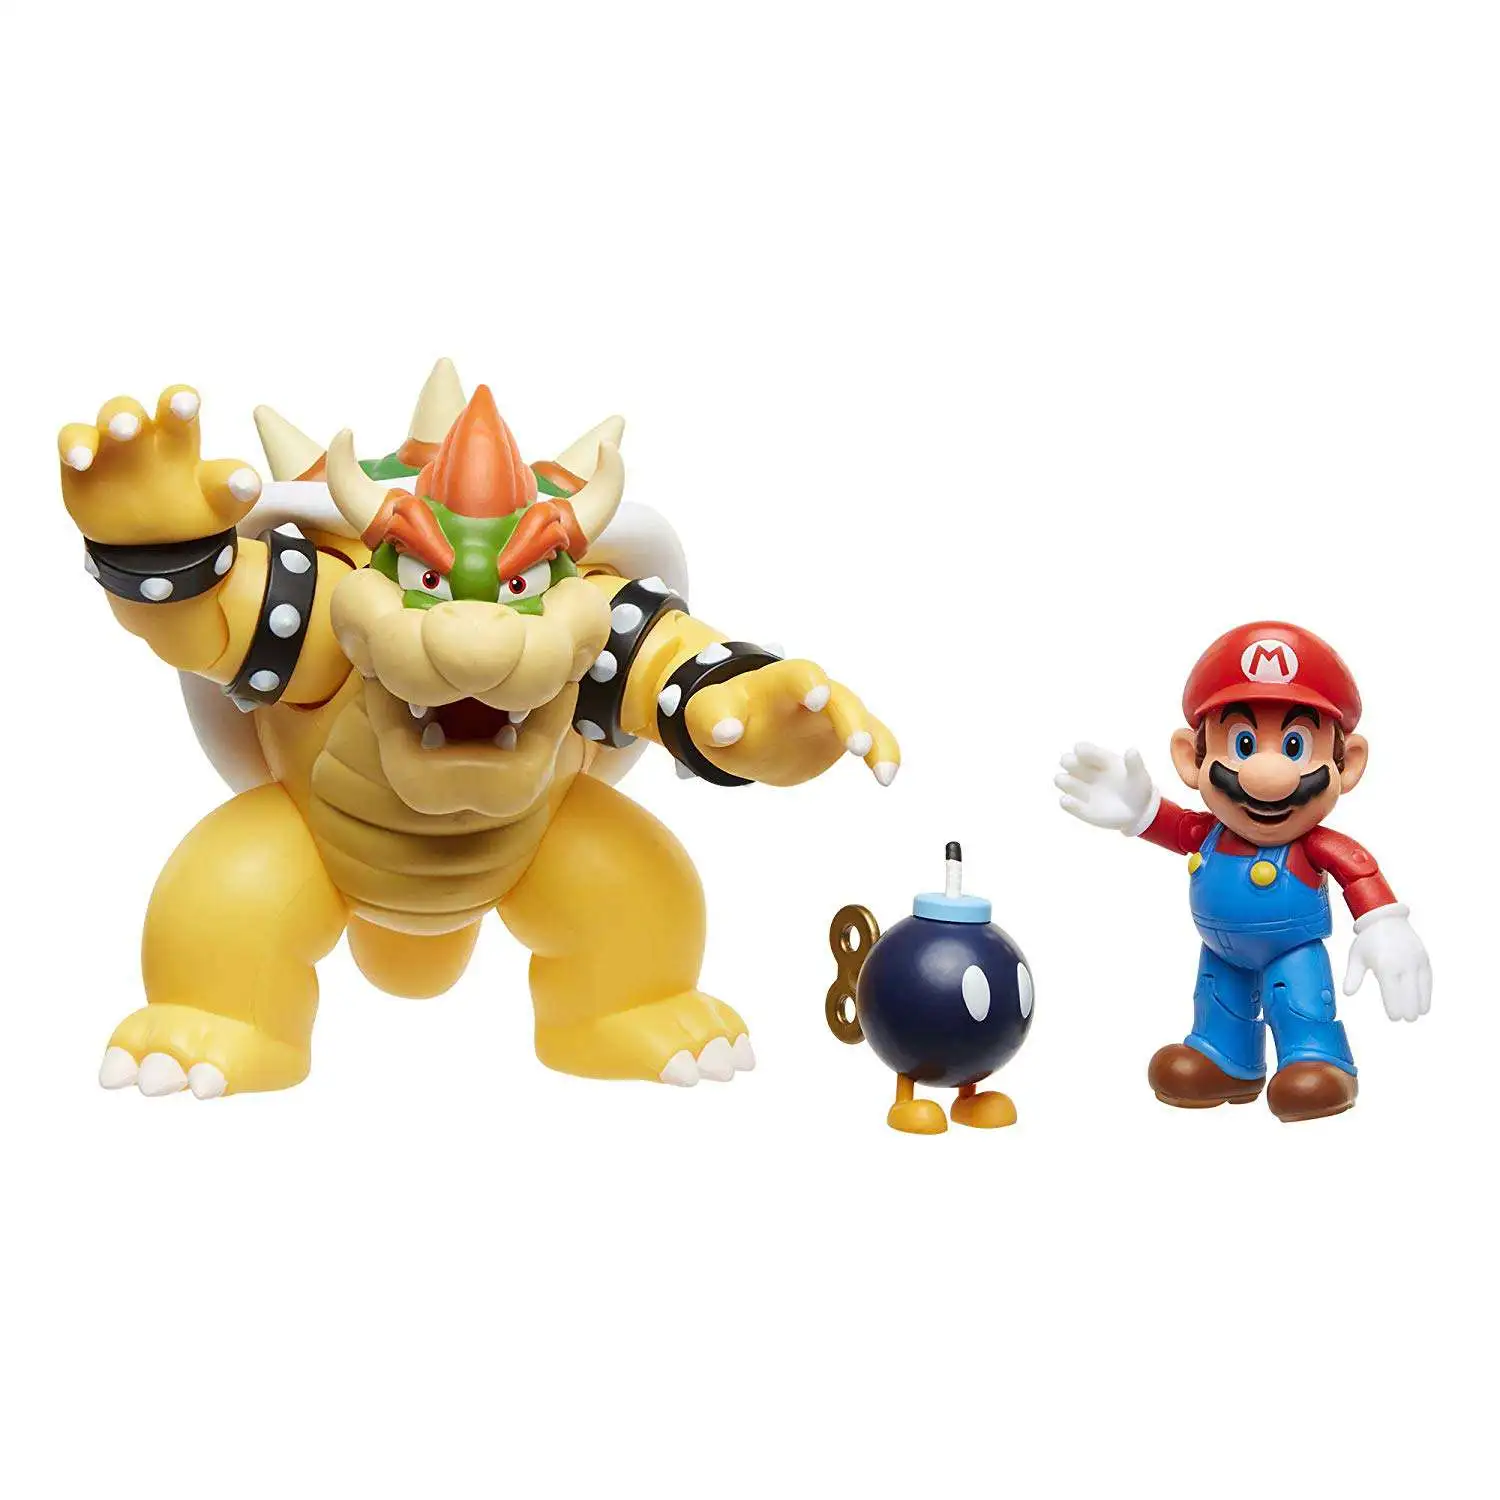 World of Nintendo New 2018 Mario Vs. Bowser Diorama Gift Set - 3